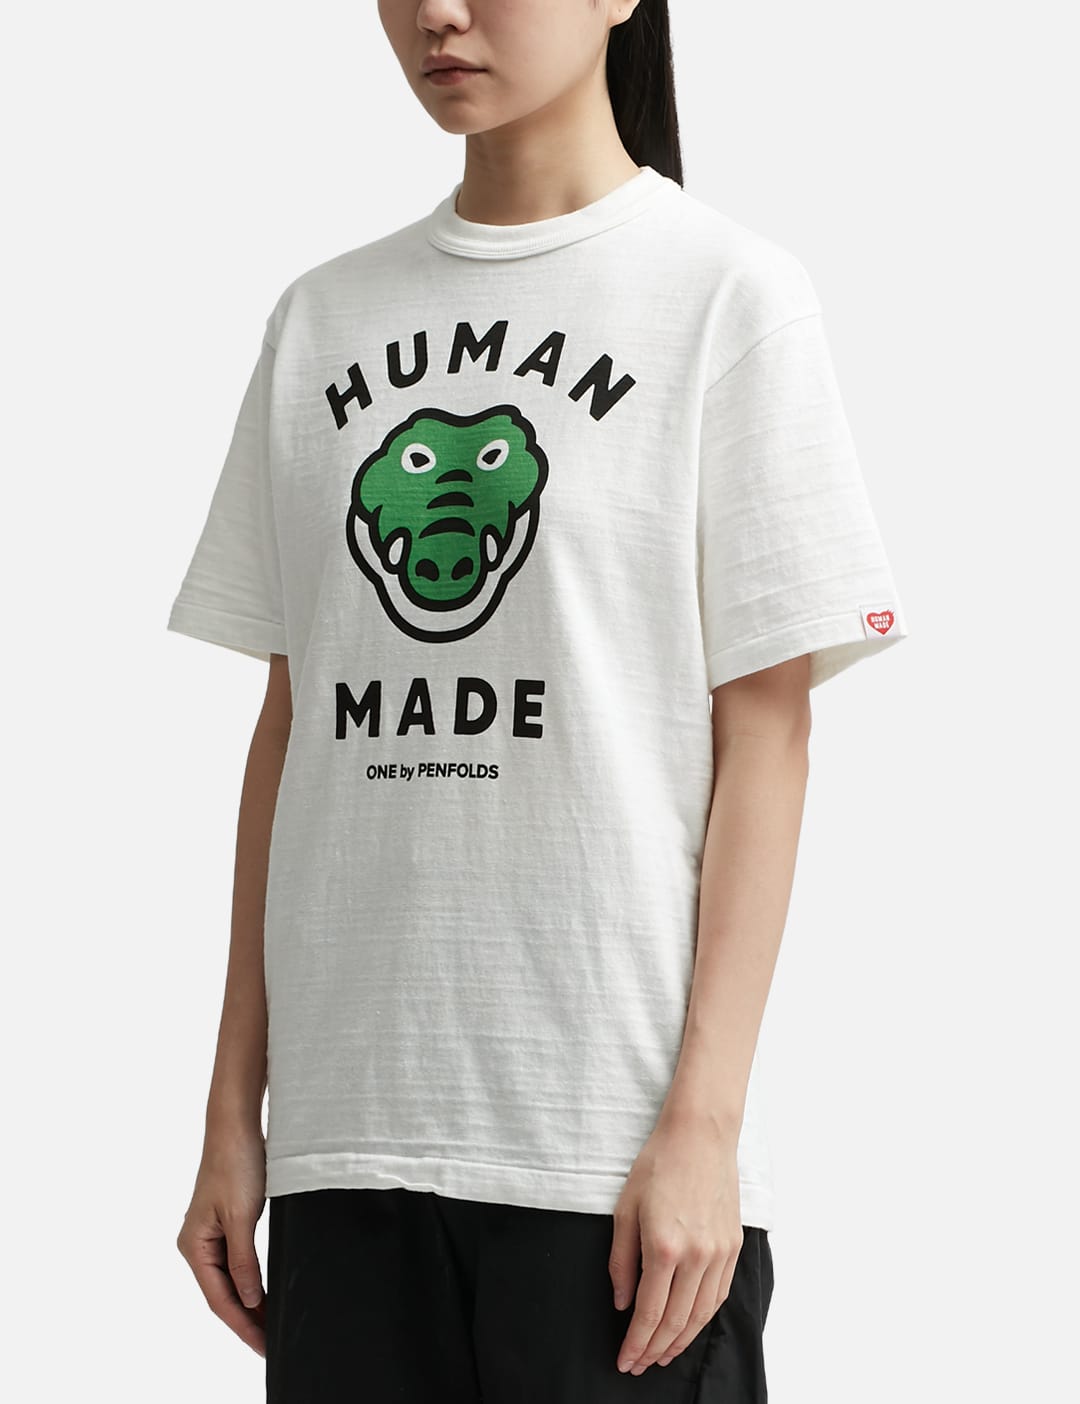 Human Made - One By Penfolds Crocodile T-shirt | HBX - Globally ...